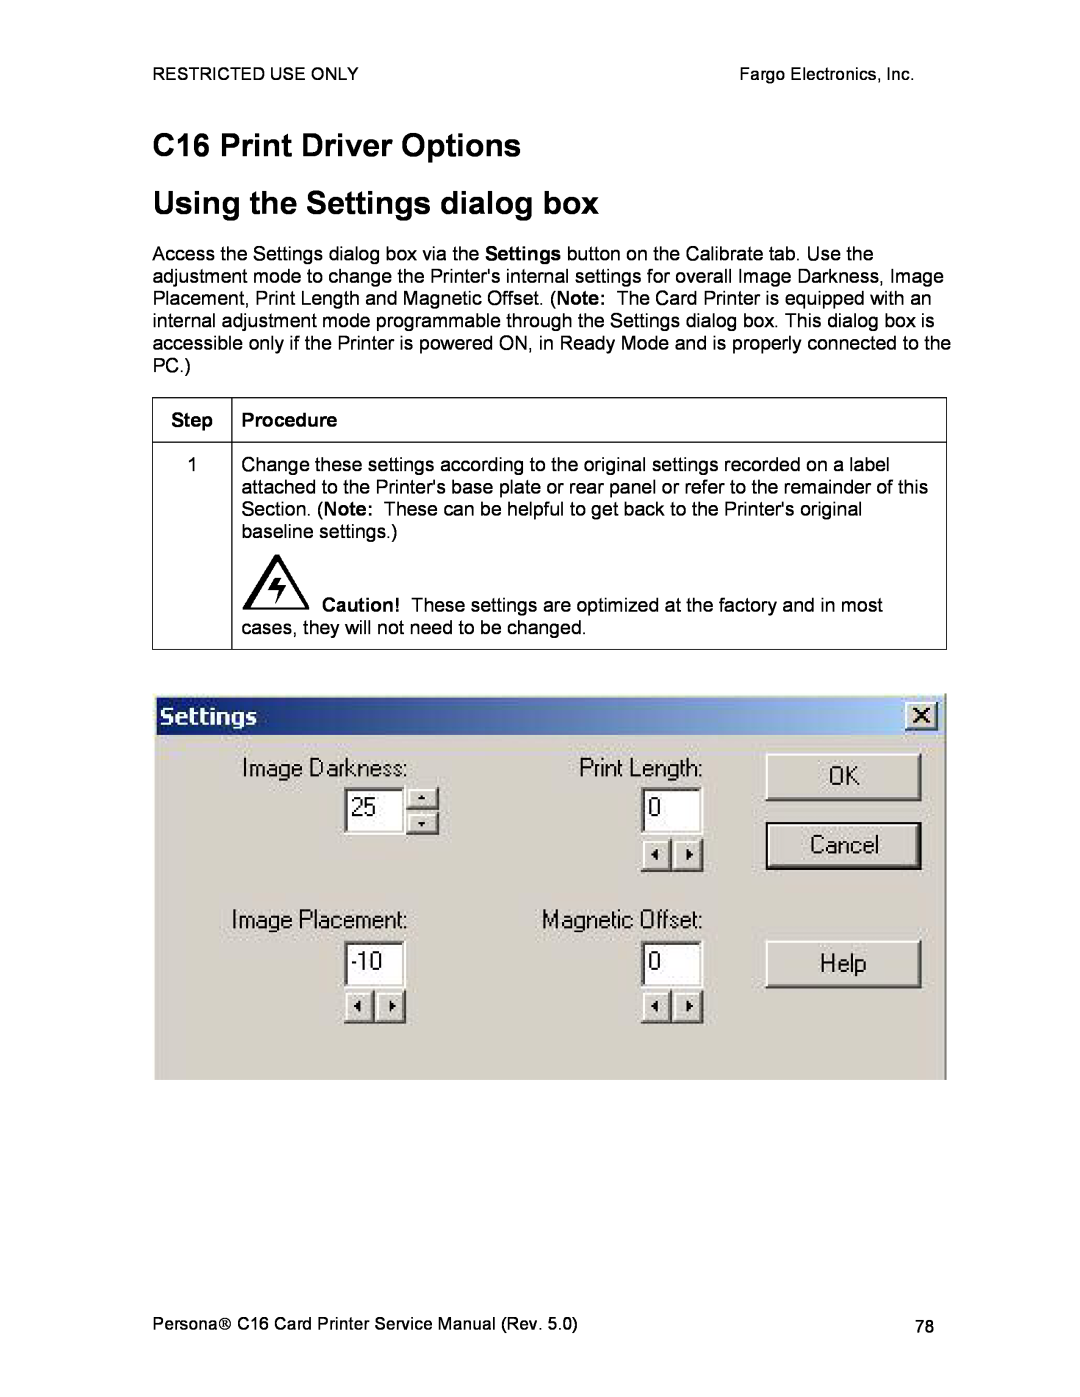 FARGO electronic service manual C16 Print Driver Options Using the Settings dialog box 